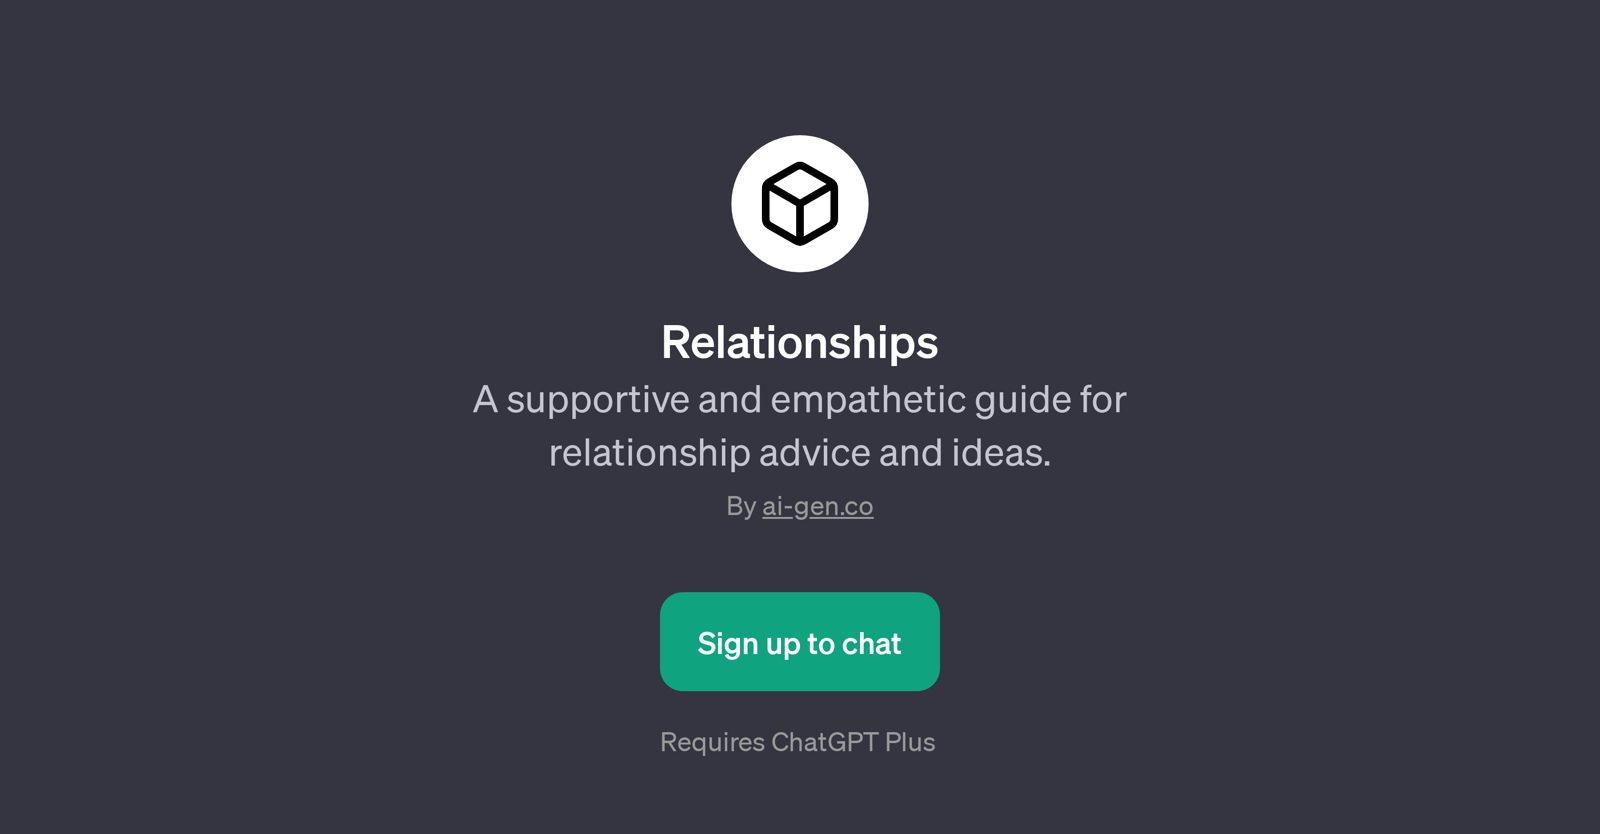 Relationships website